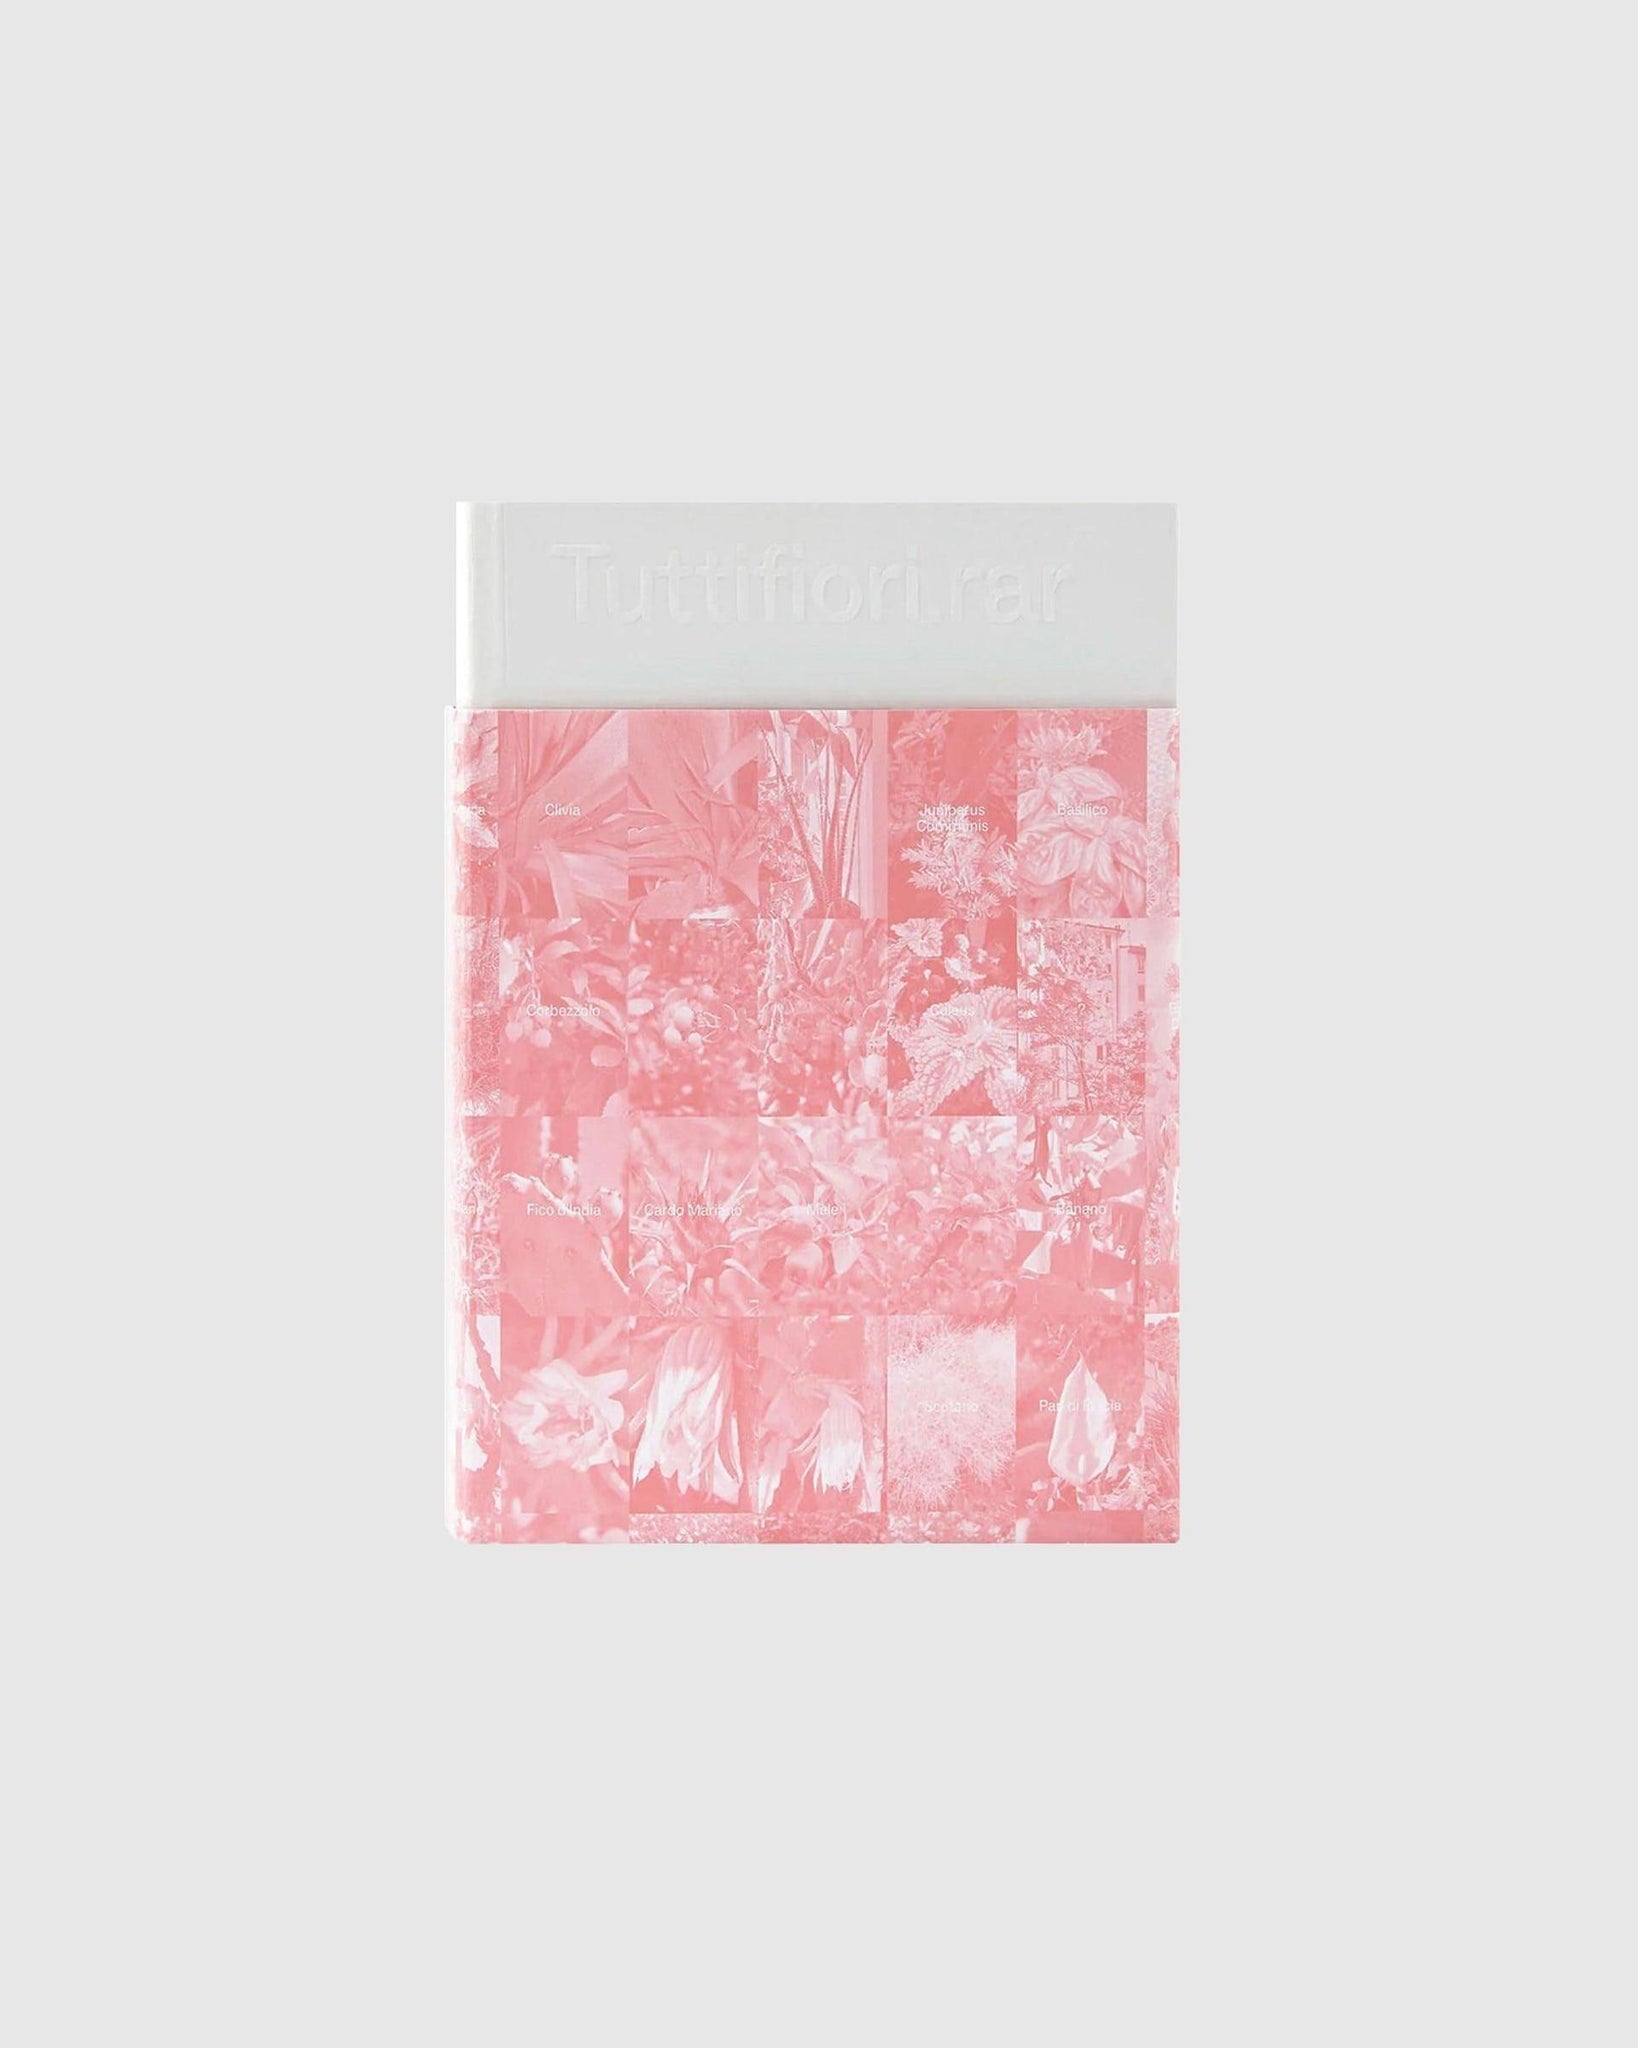 Tuttifiori.rar Book in Red - {{ collection.title }} - Chinatown Country Club 